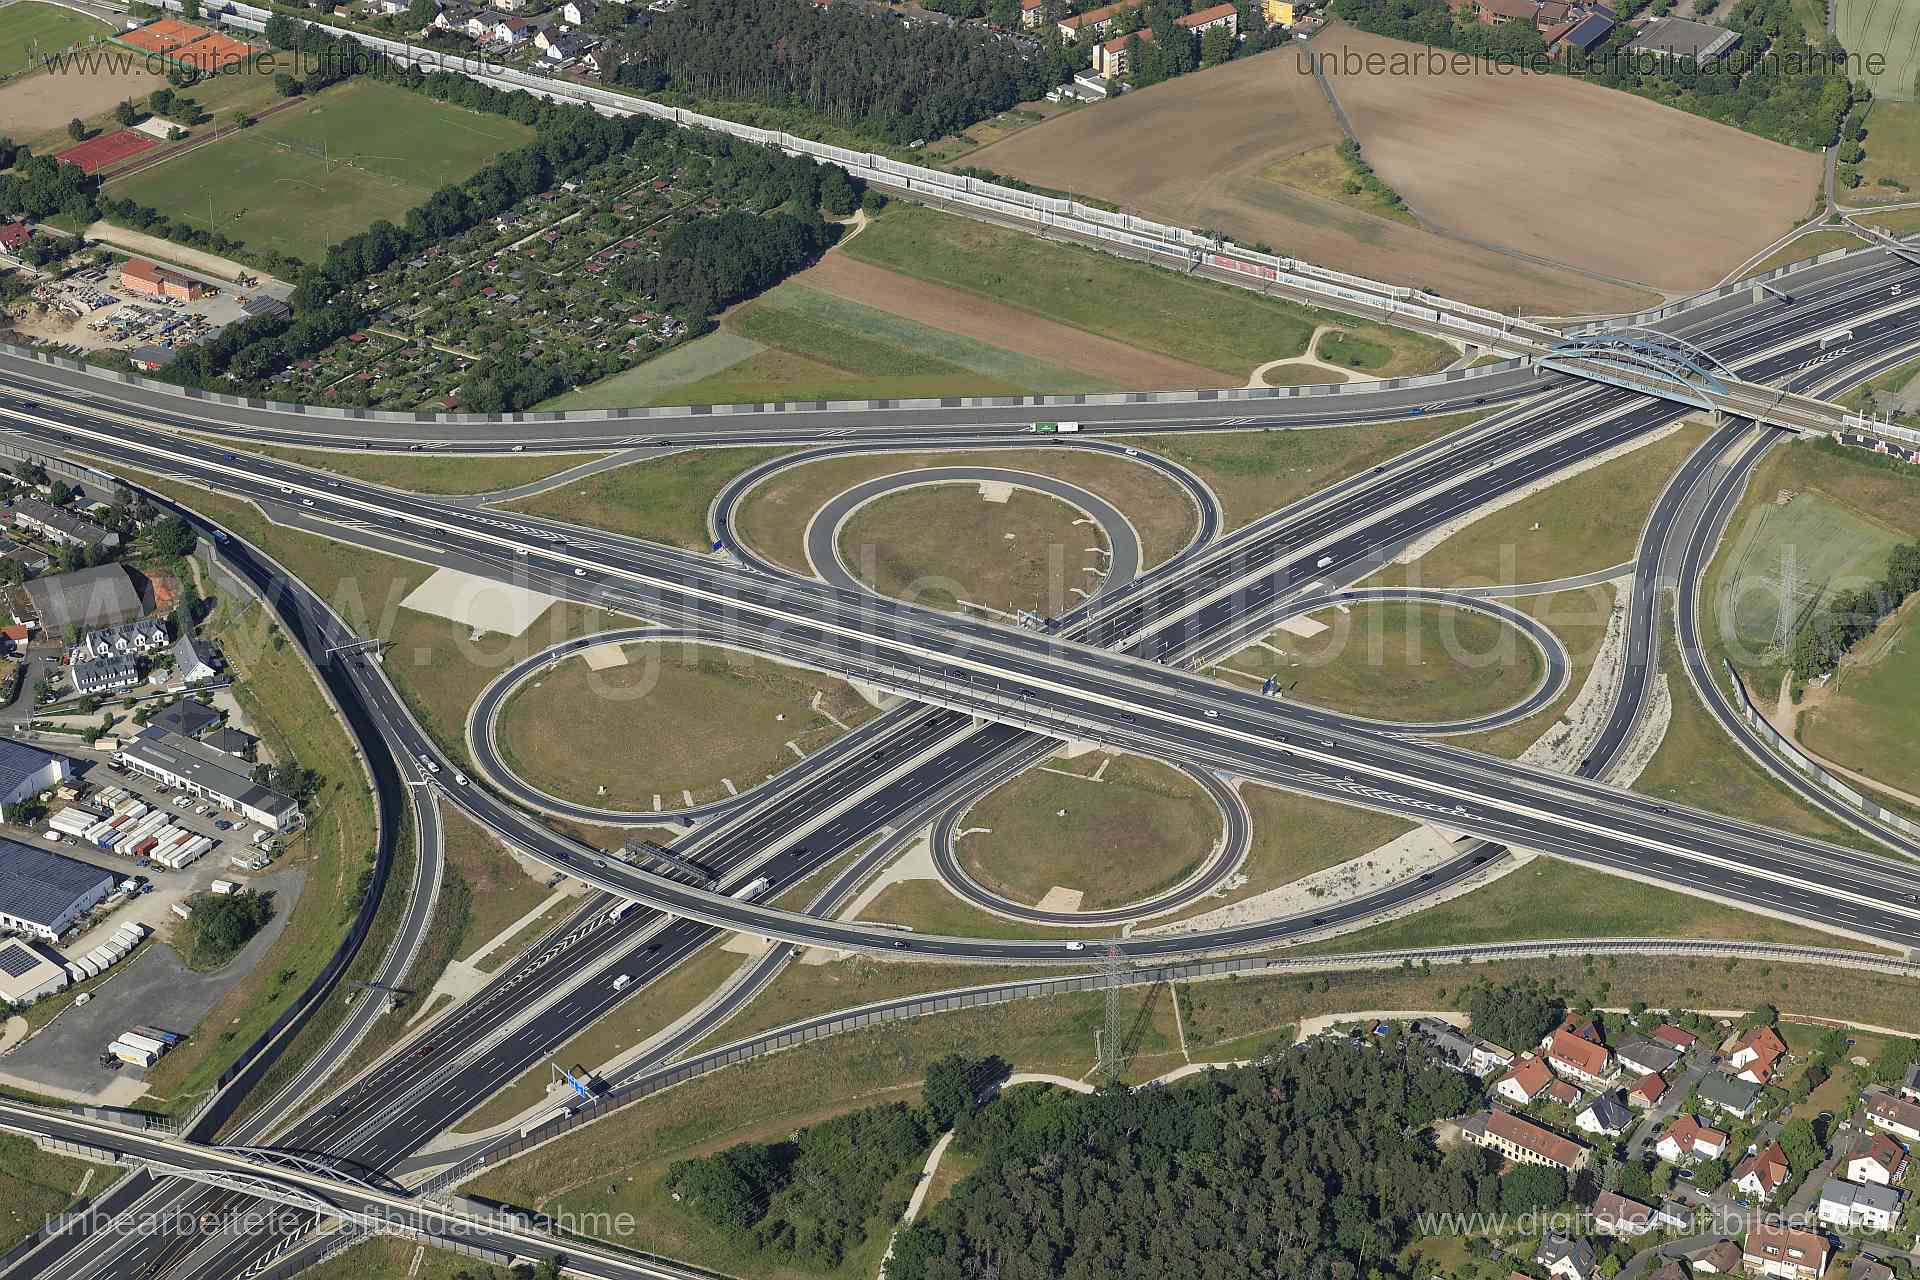 Luftbild - Autobahnkreuz A3 / A73, Ort: Erlangen, Tags: Autobahnkreuz A3 / A73, Autobahnkreuz, Autobahn, BAB 73, BAB 3, Ve...